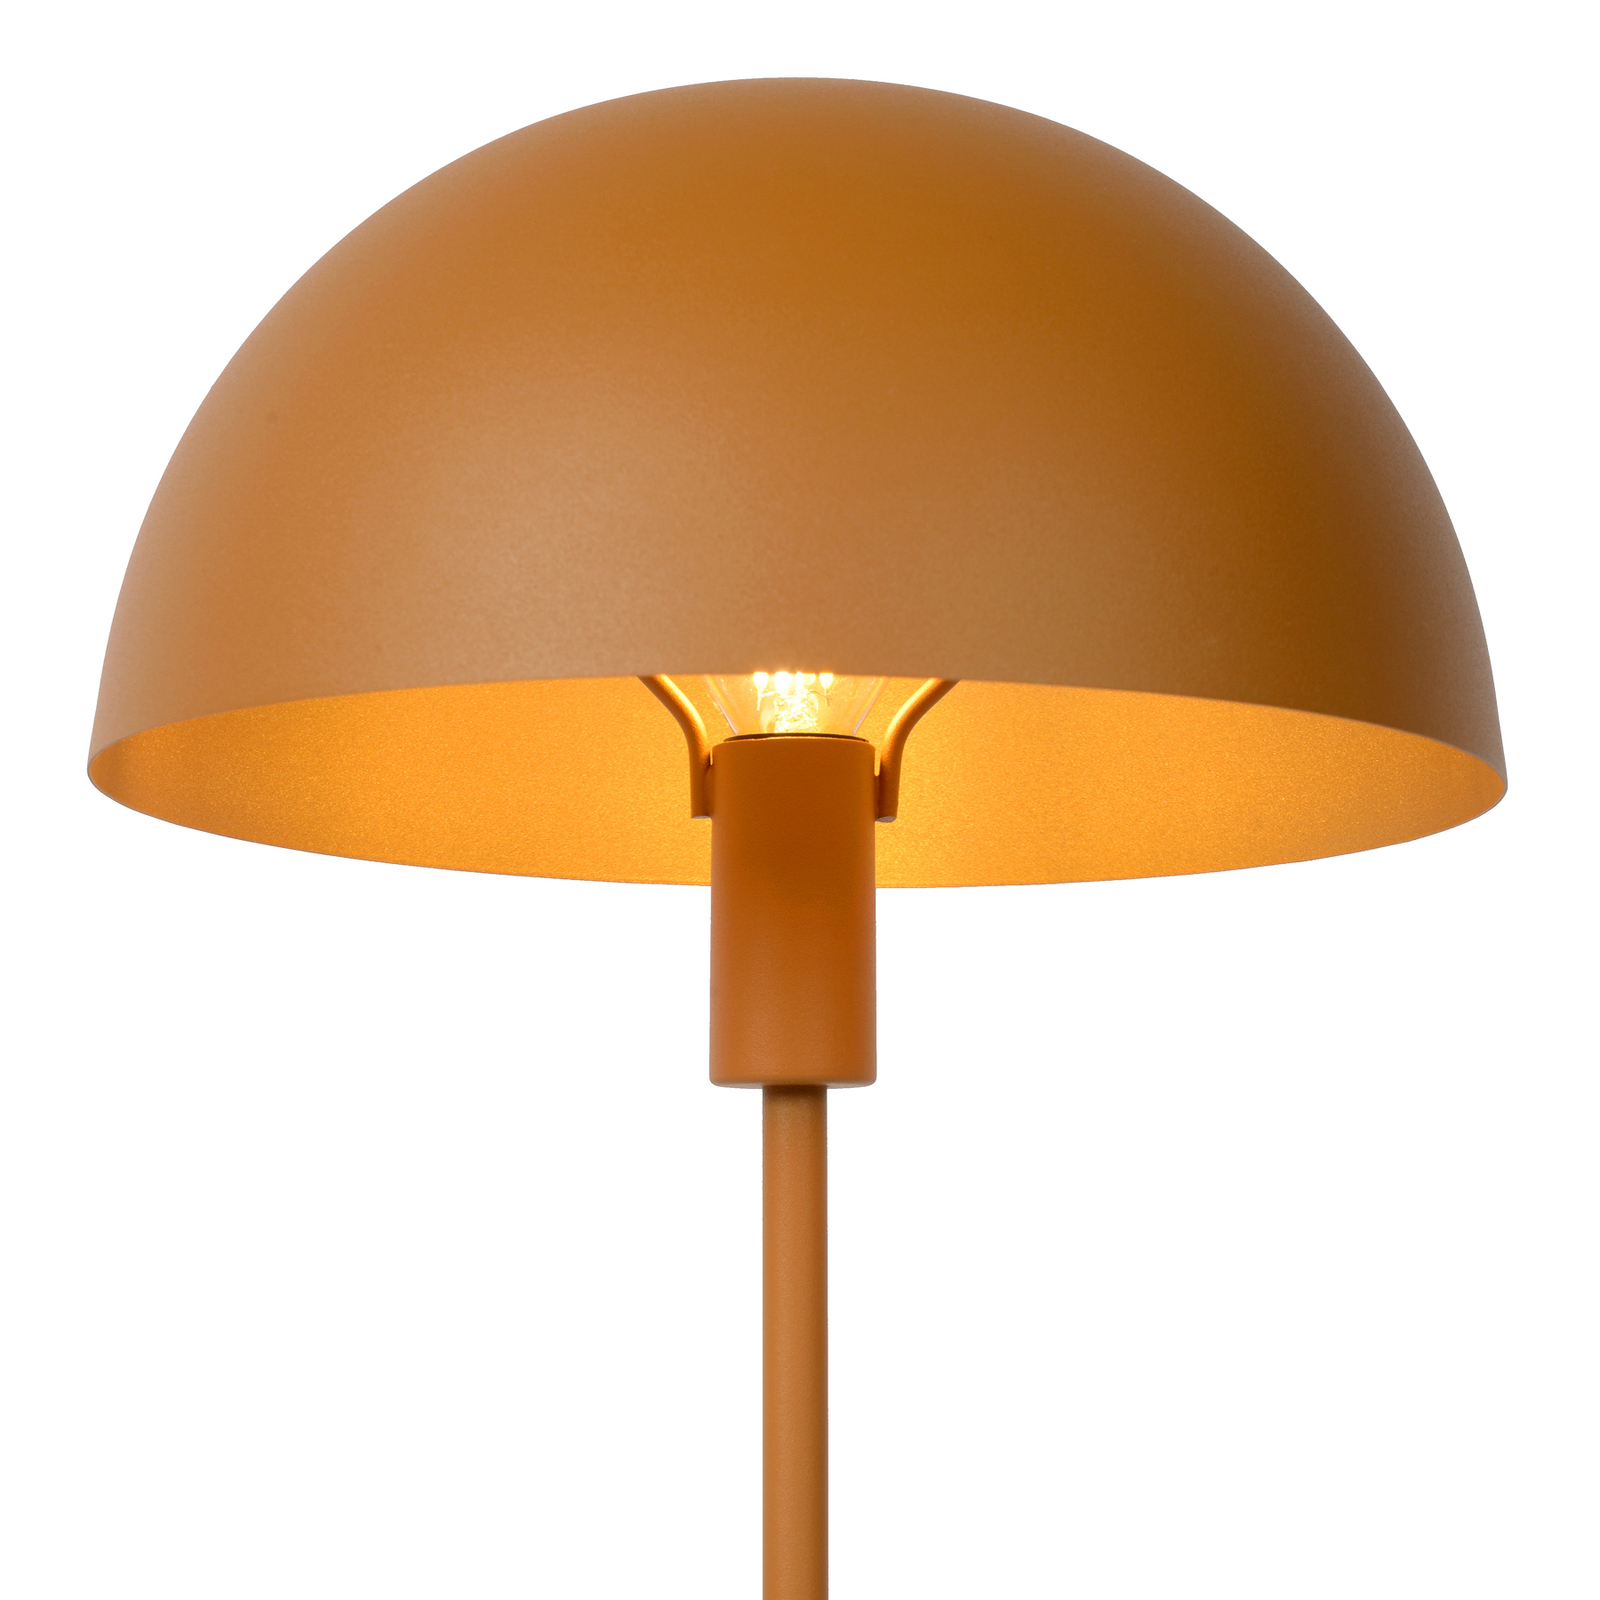 Siemon table lamp made of steel, Ø 25 cm, ochre yellow